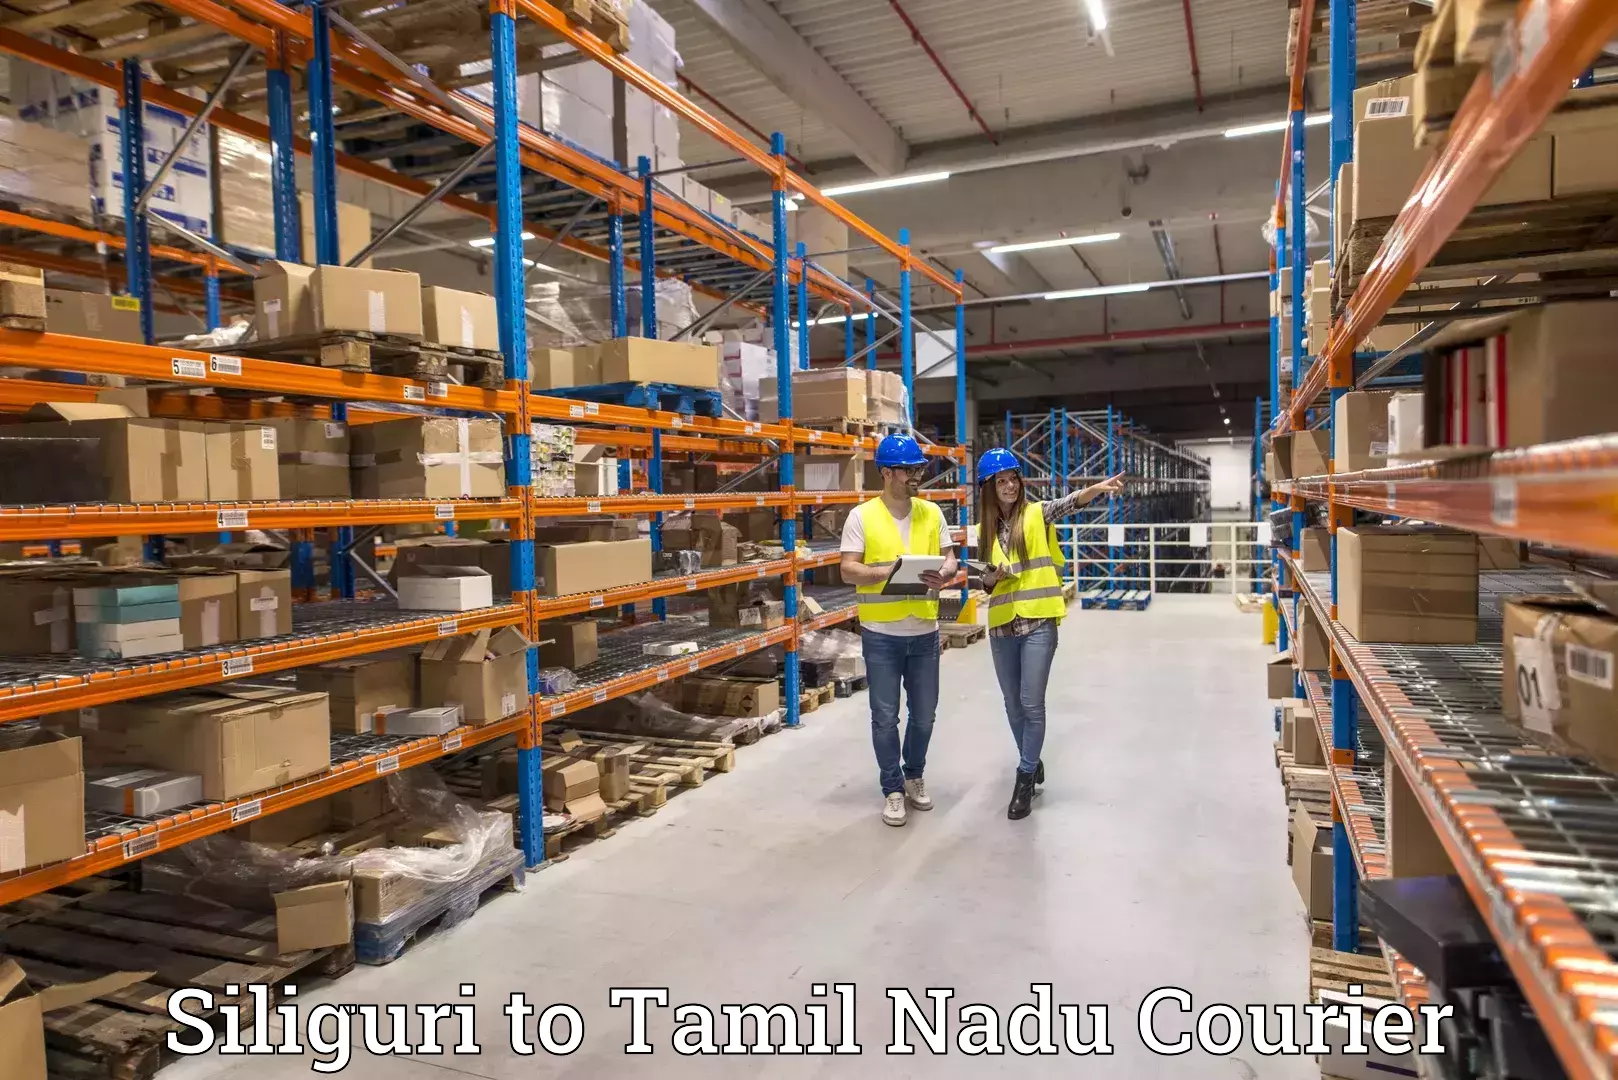 Advanced tracking systems in Siliguri to Tamil Nadu